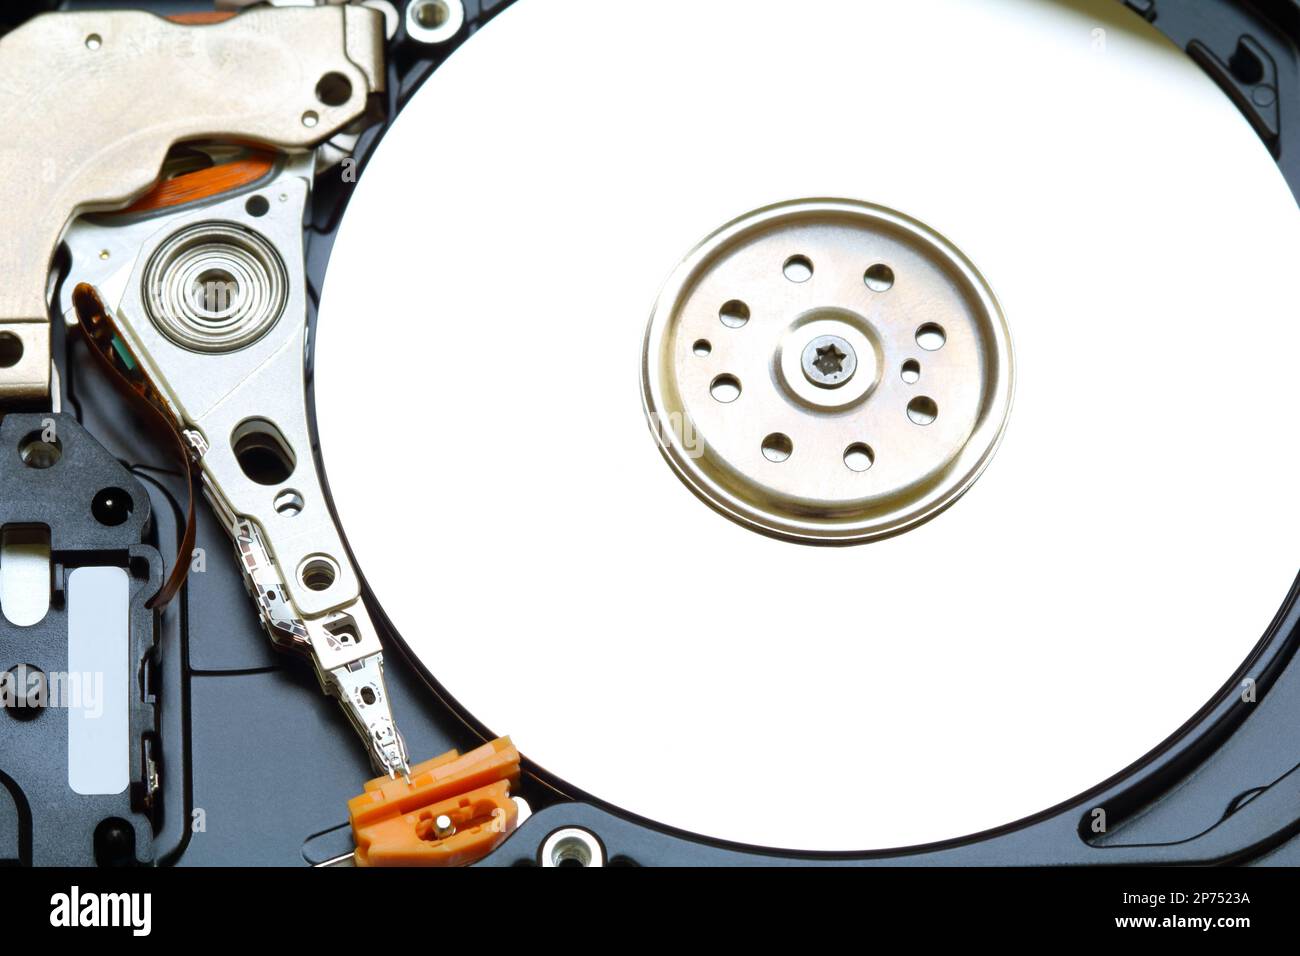 Open hard drive. Close-up Stock Photo